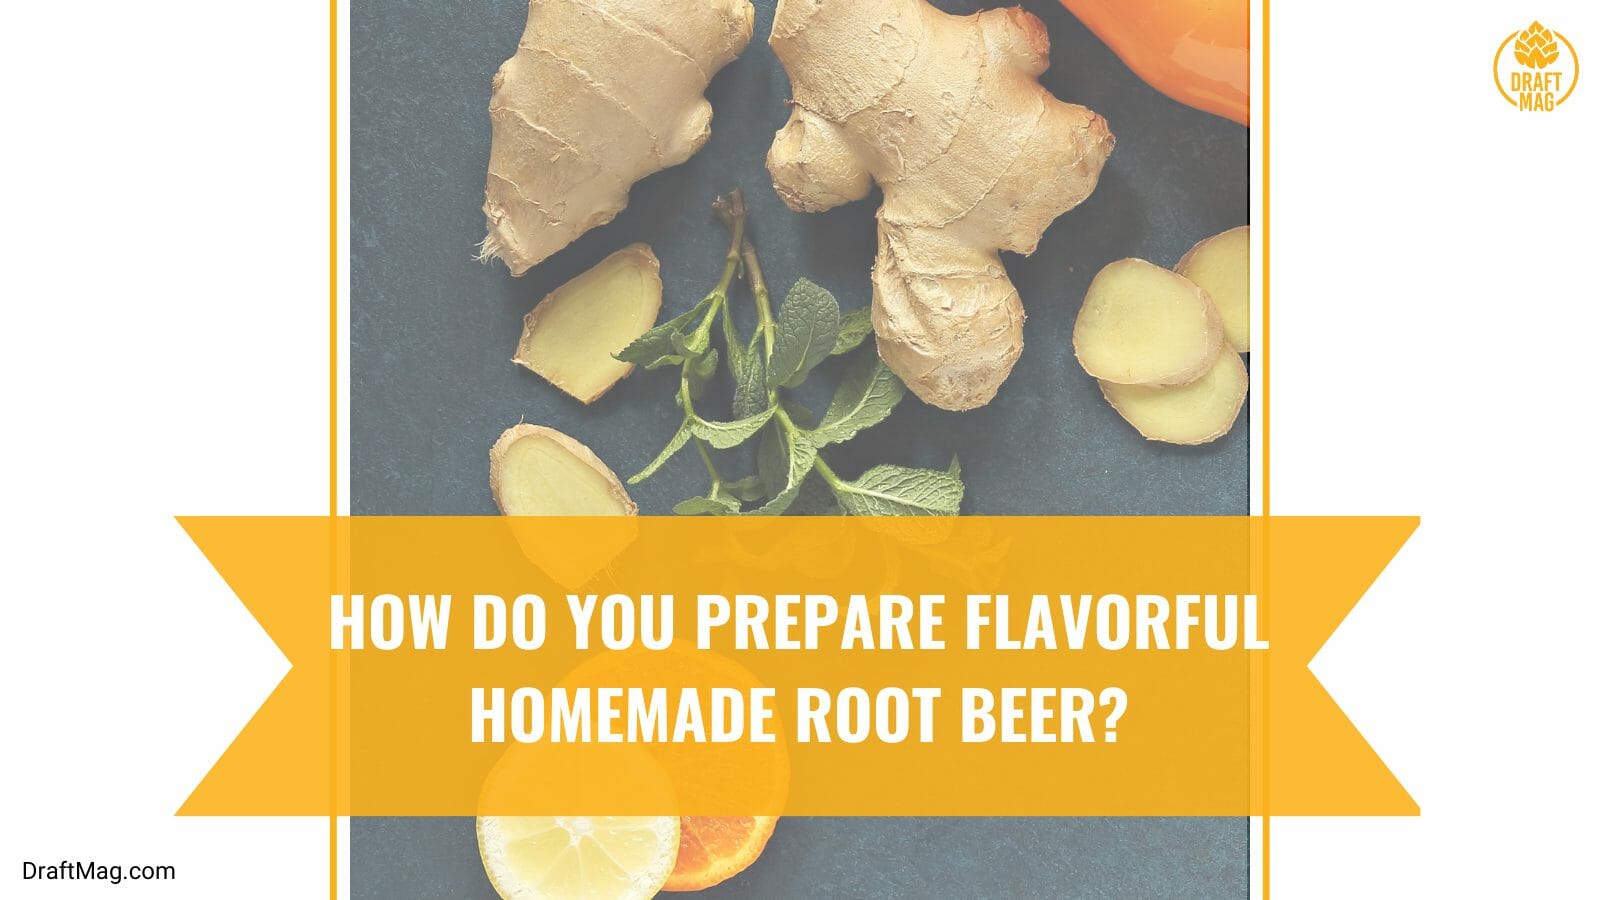 Homemade root beer